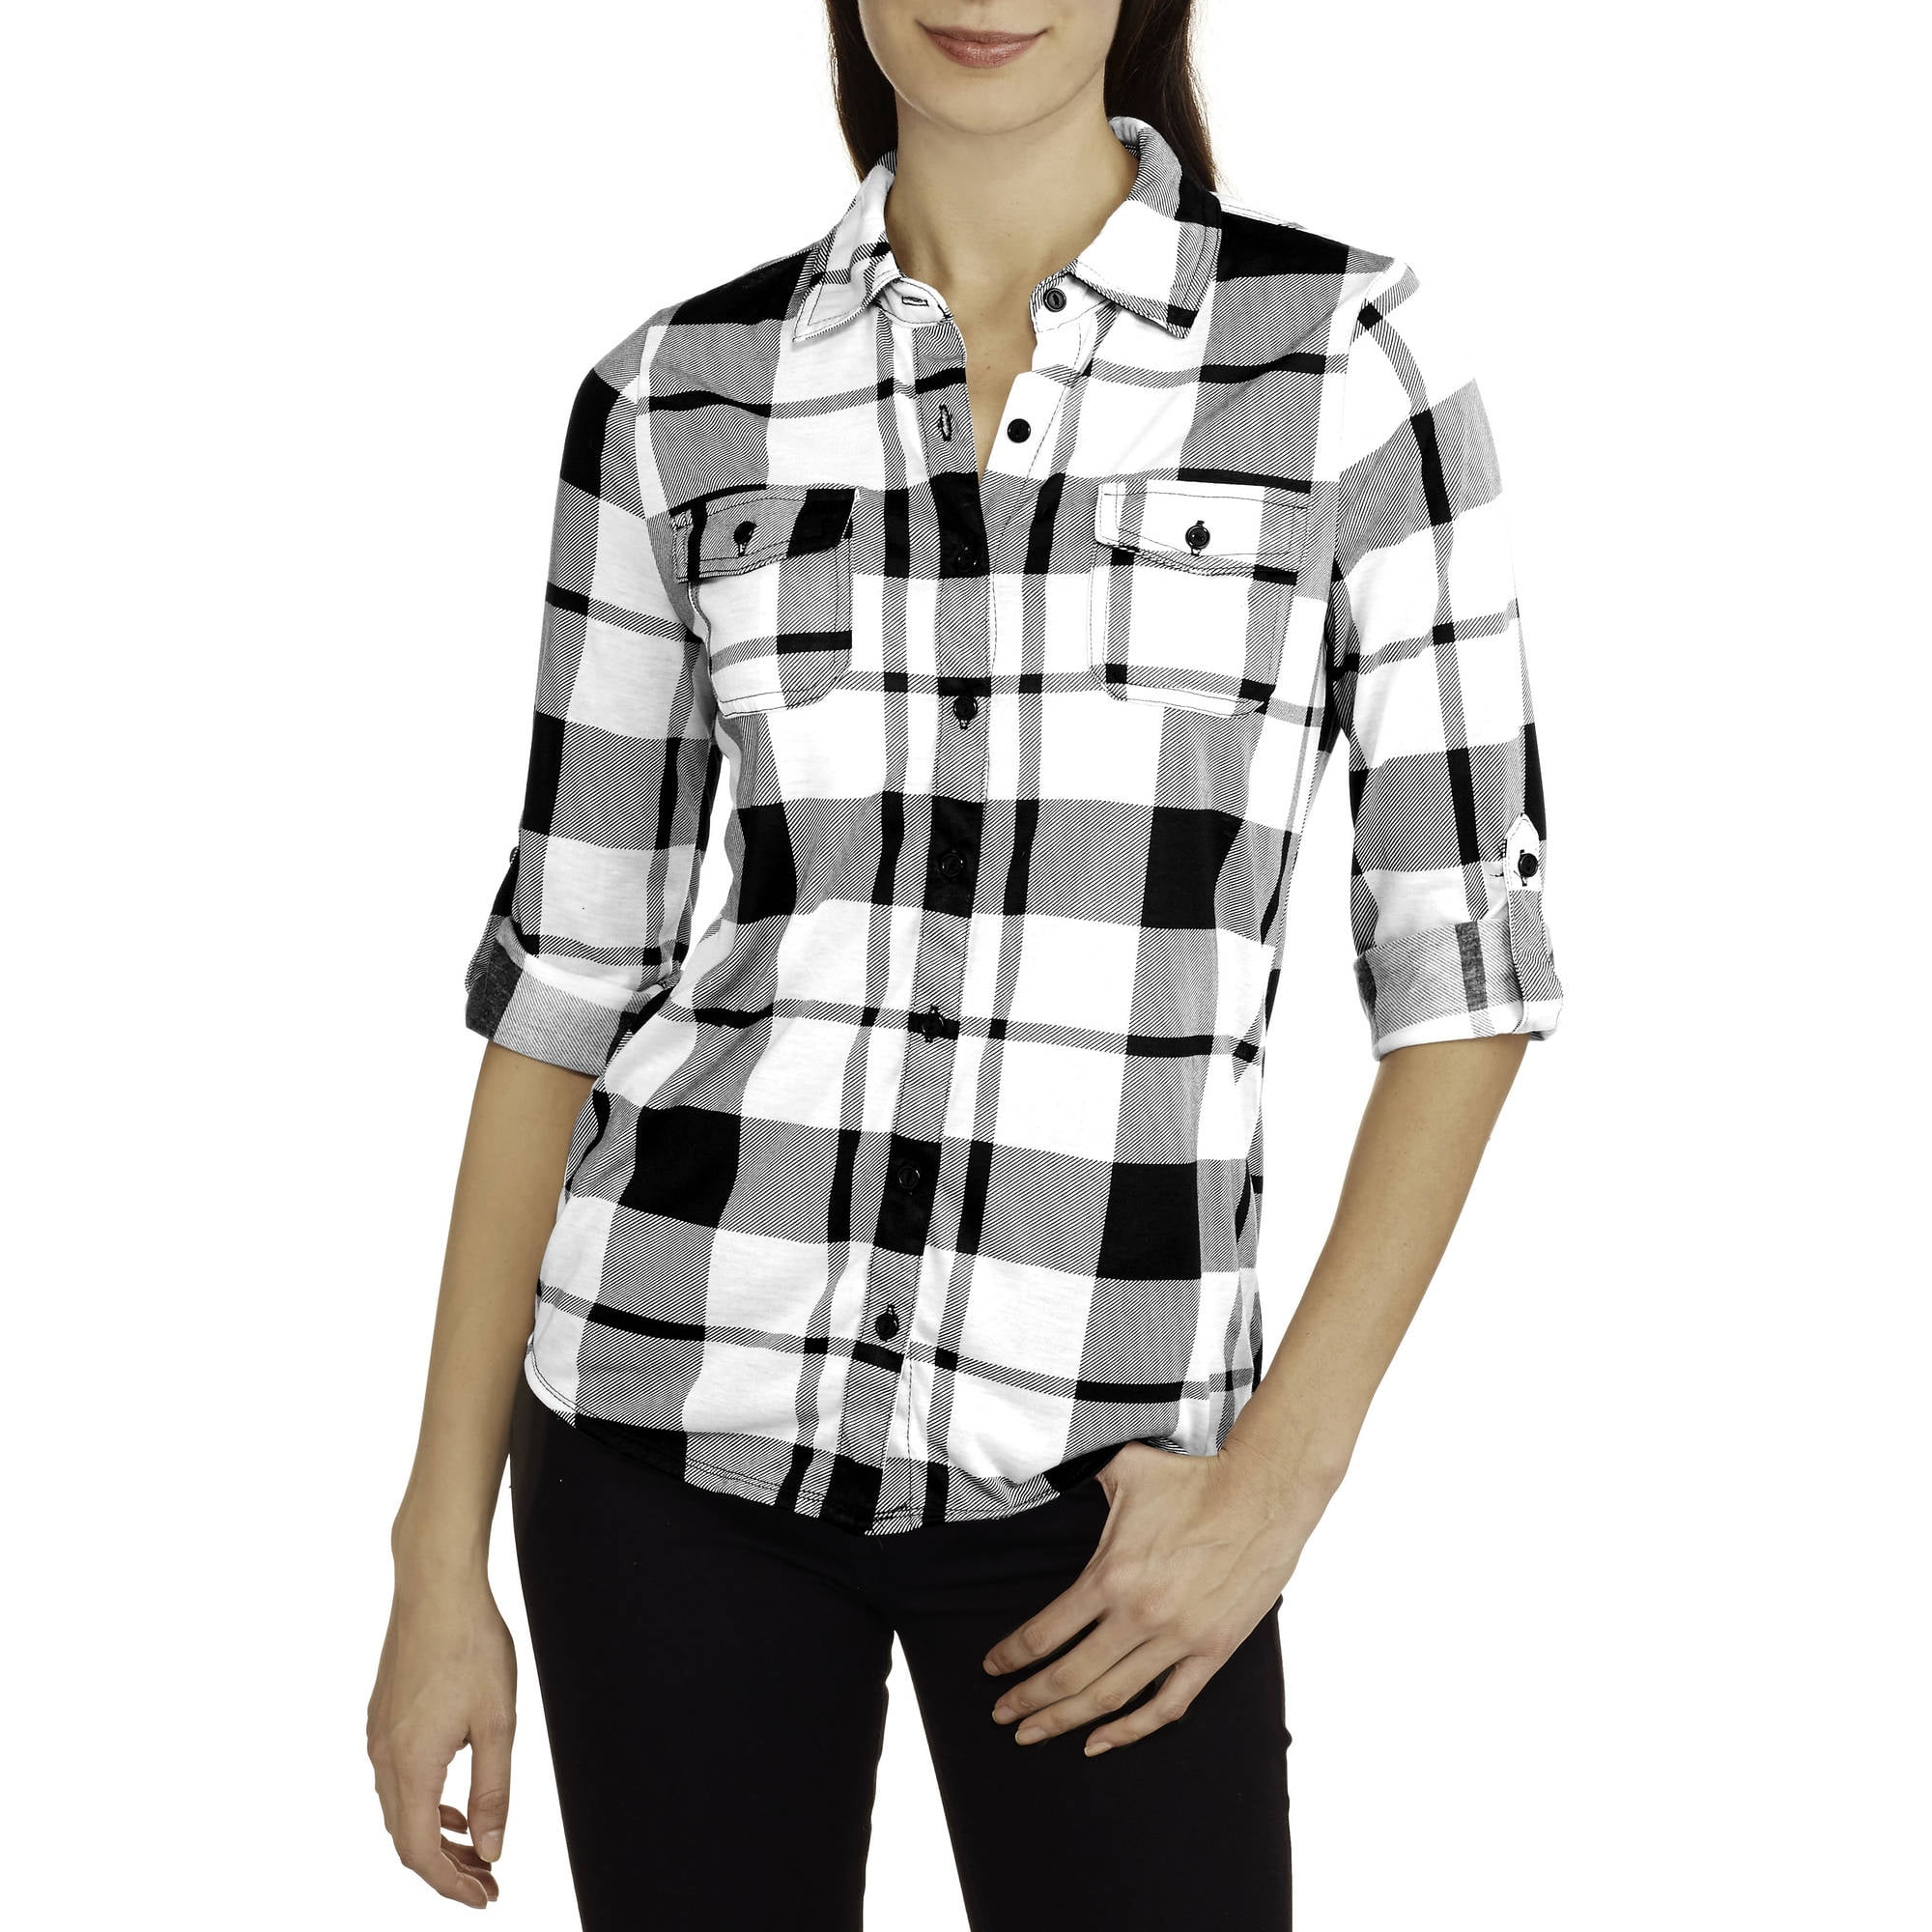 Black Button Down Shirts - Walmart.com